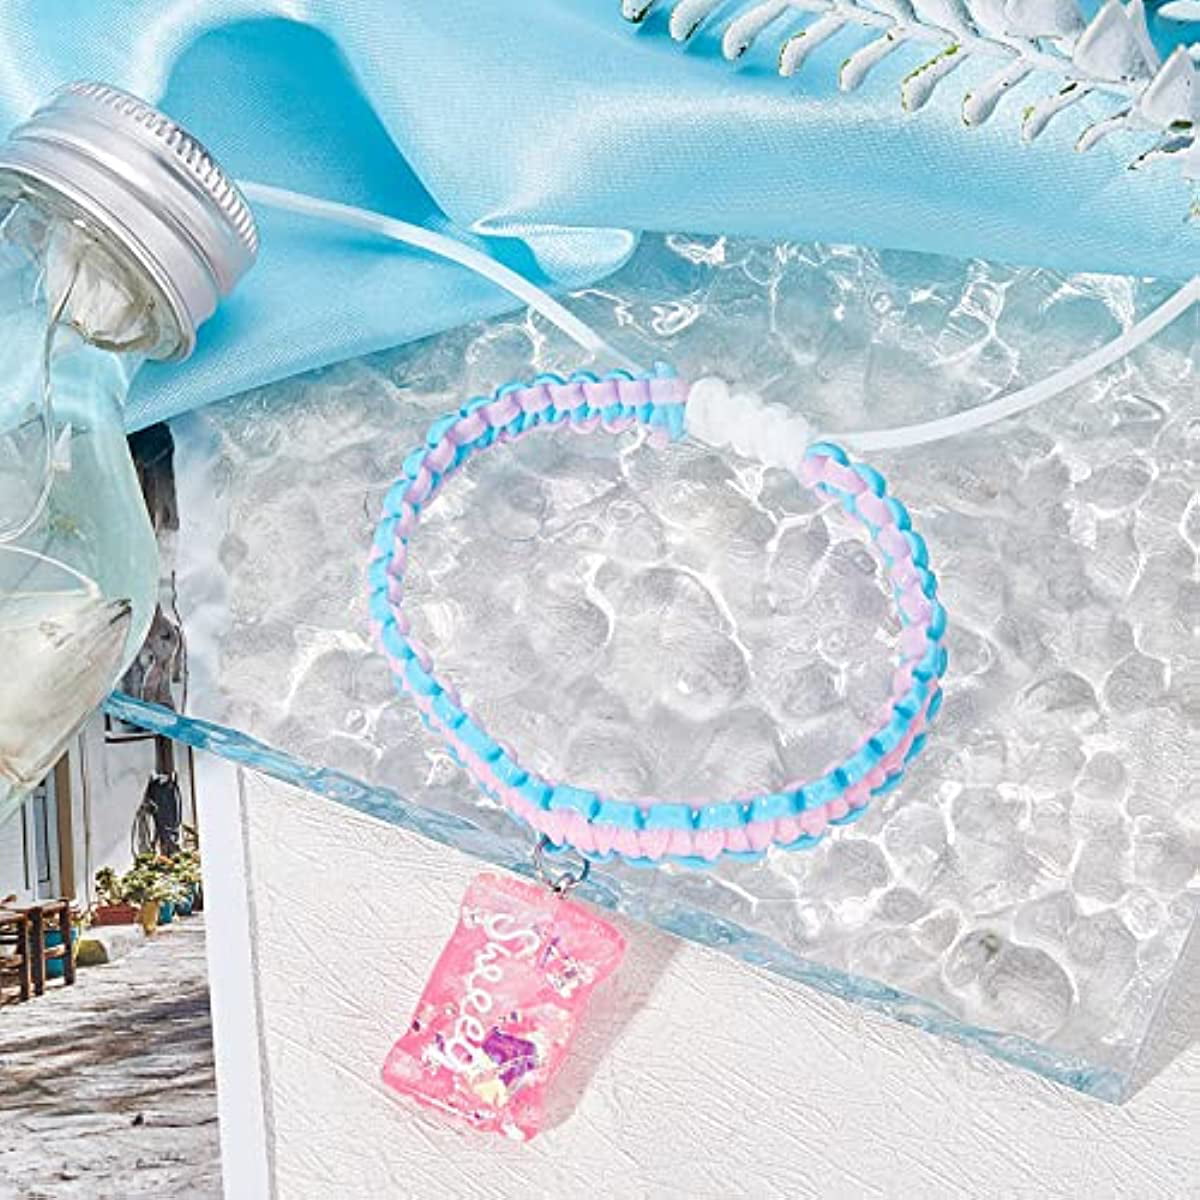 20 Bundles Lanyard String Kit, Gimp Bracelet Making Kit Boondoggle String  Plastic Lacing Cord with 200 Beads, 20 Pendant,Gimp String Kit for DIY